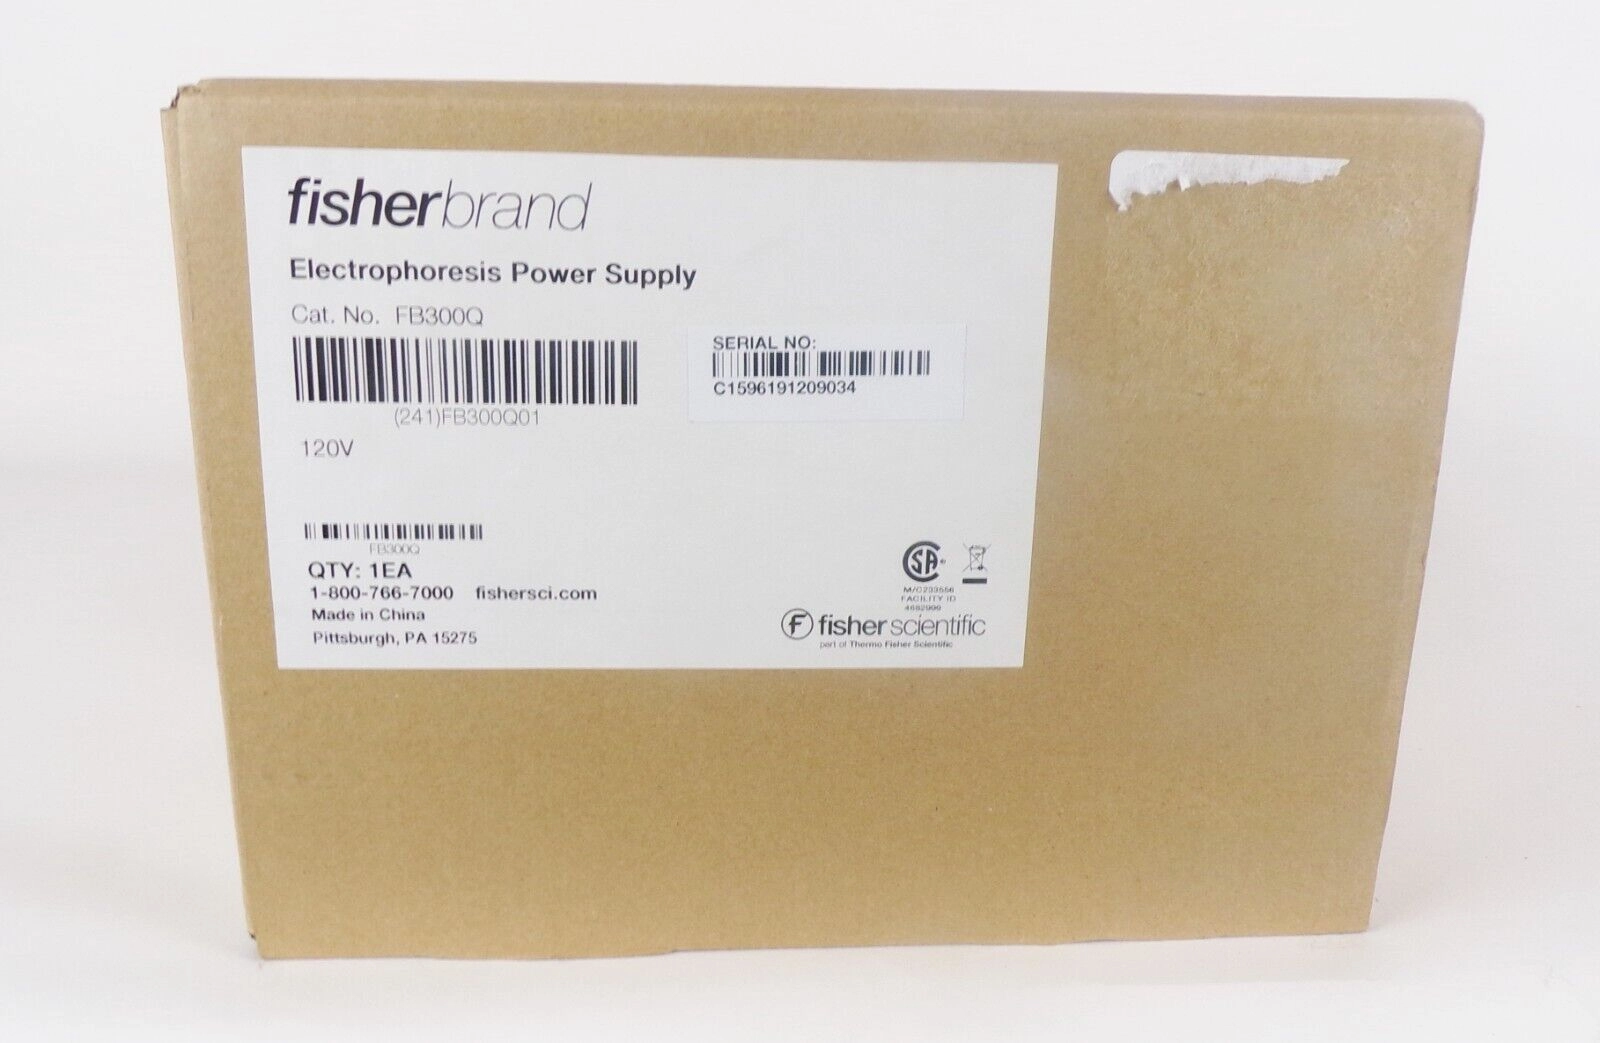 Fisherbrand Electrophoresis Power Supply FB300Q (u